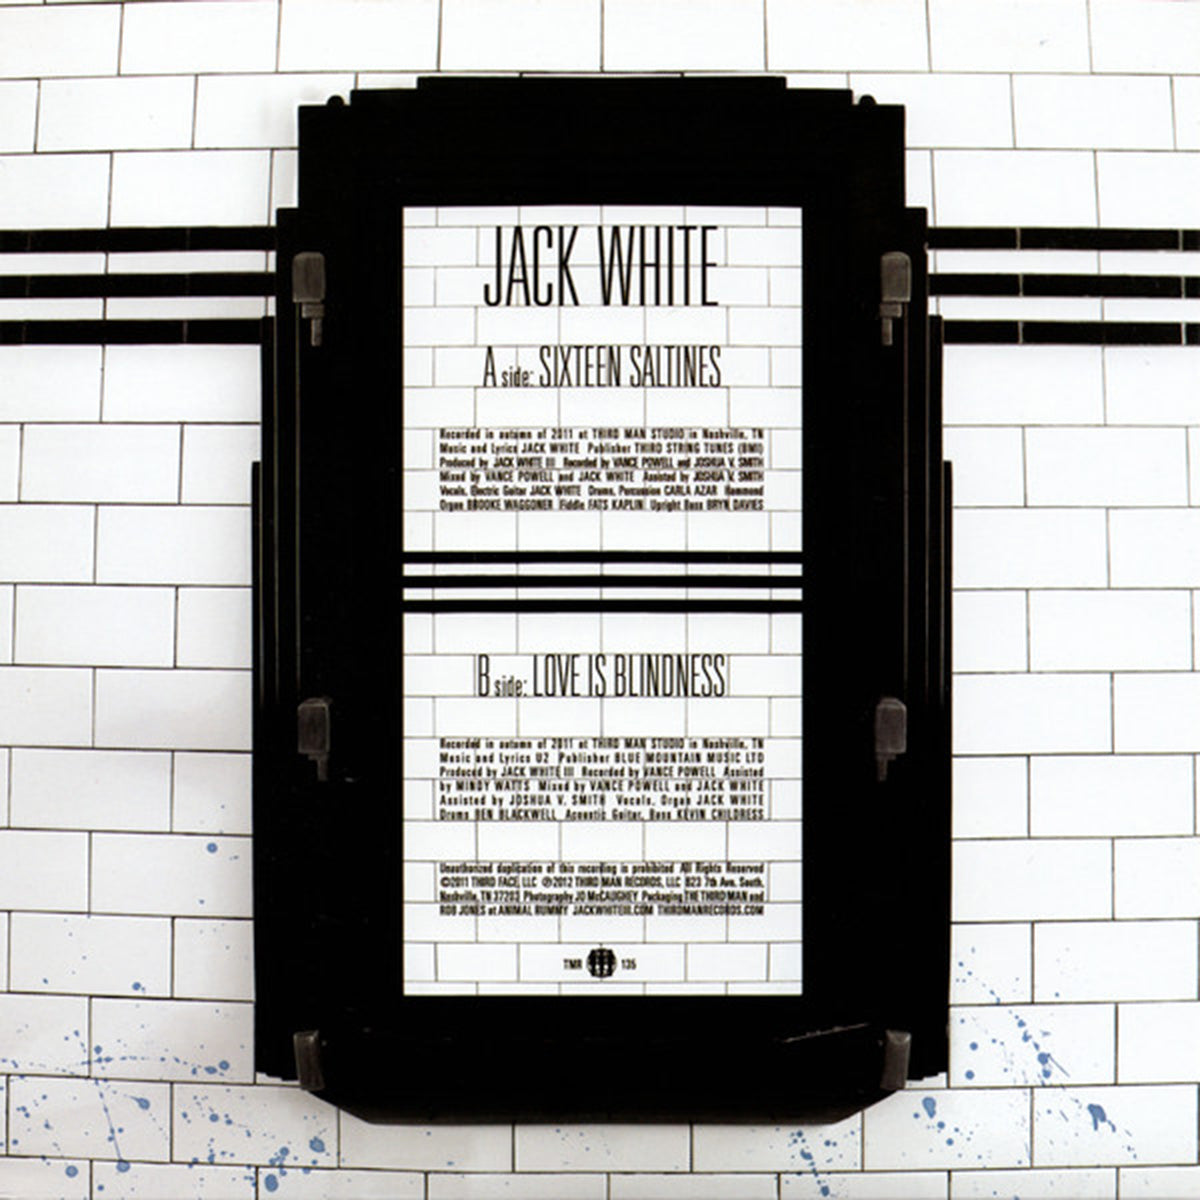 Jack White – Sixteen Saltines - 45 RPM Single